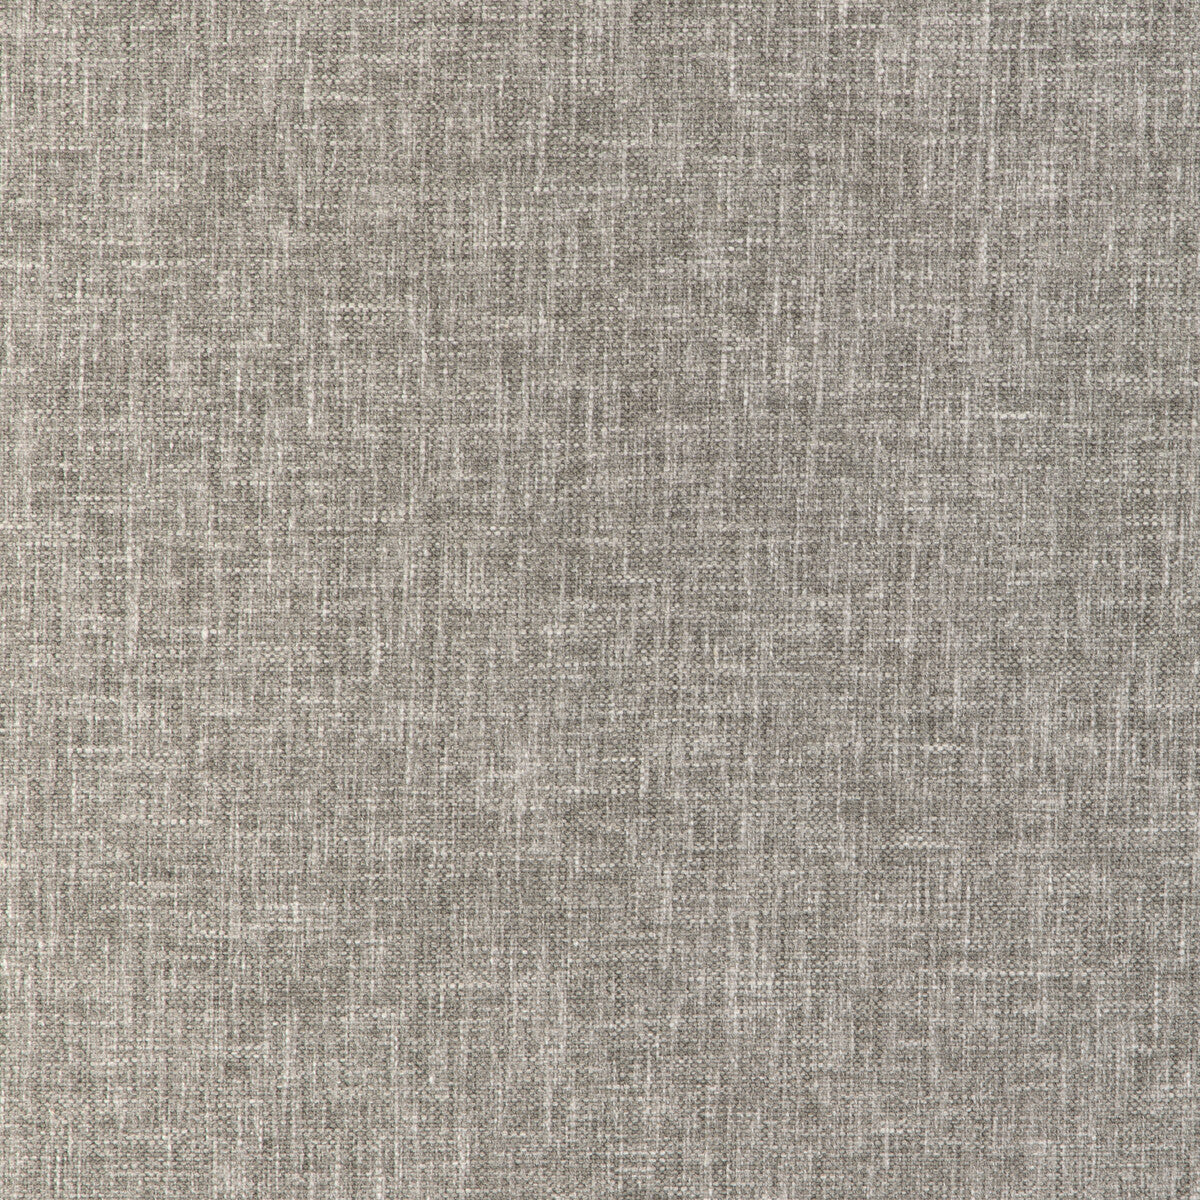 Kravet Smart fabric in 36657-1101 color - pattern 36657.1101.0 - by Kravet Smart in the Performance Kravetarmor collection